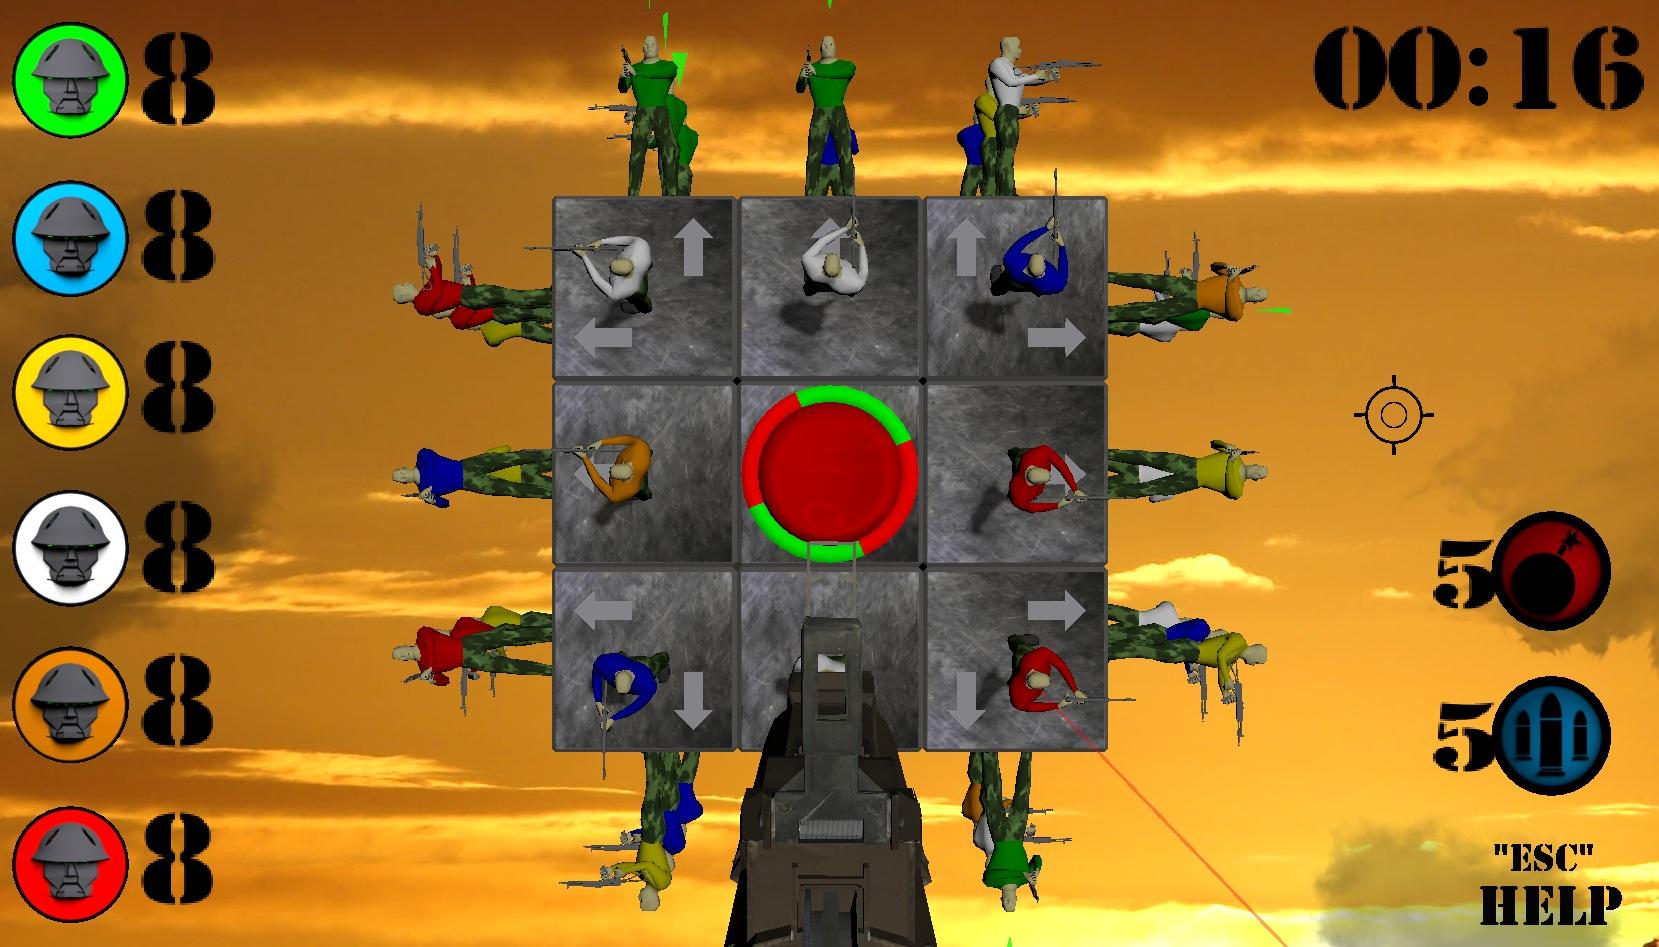 Screenshot №3 from game War Cube